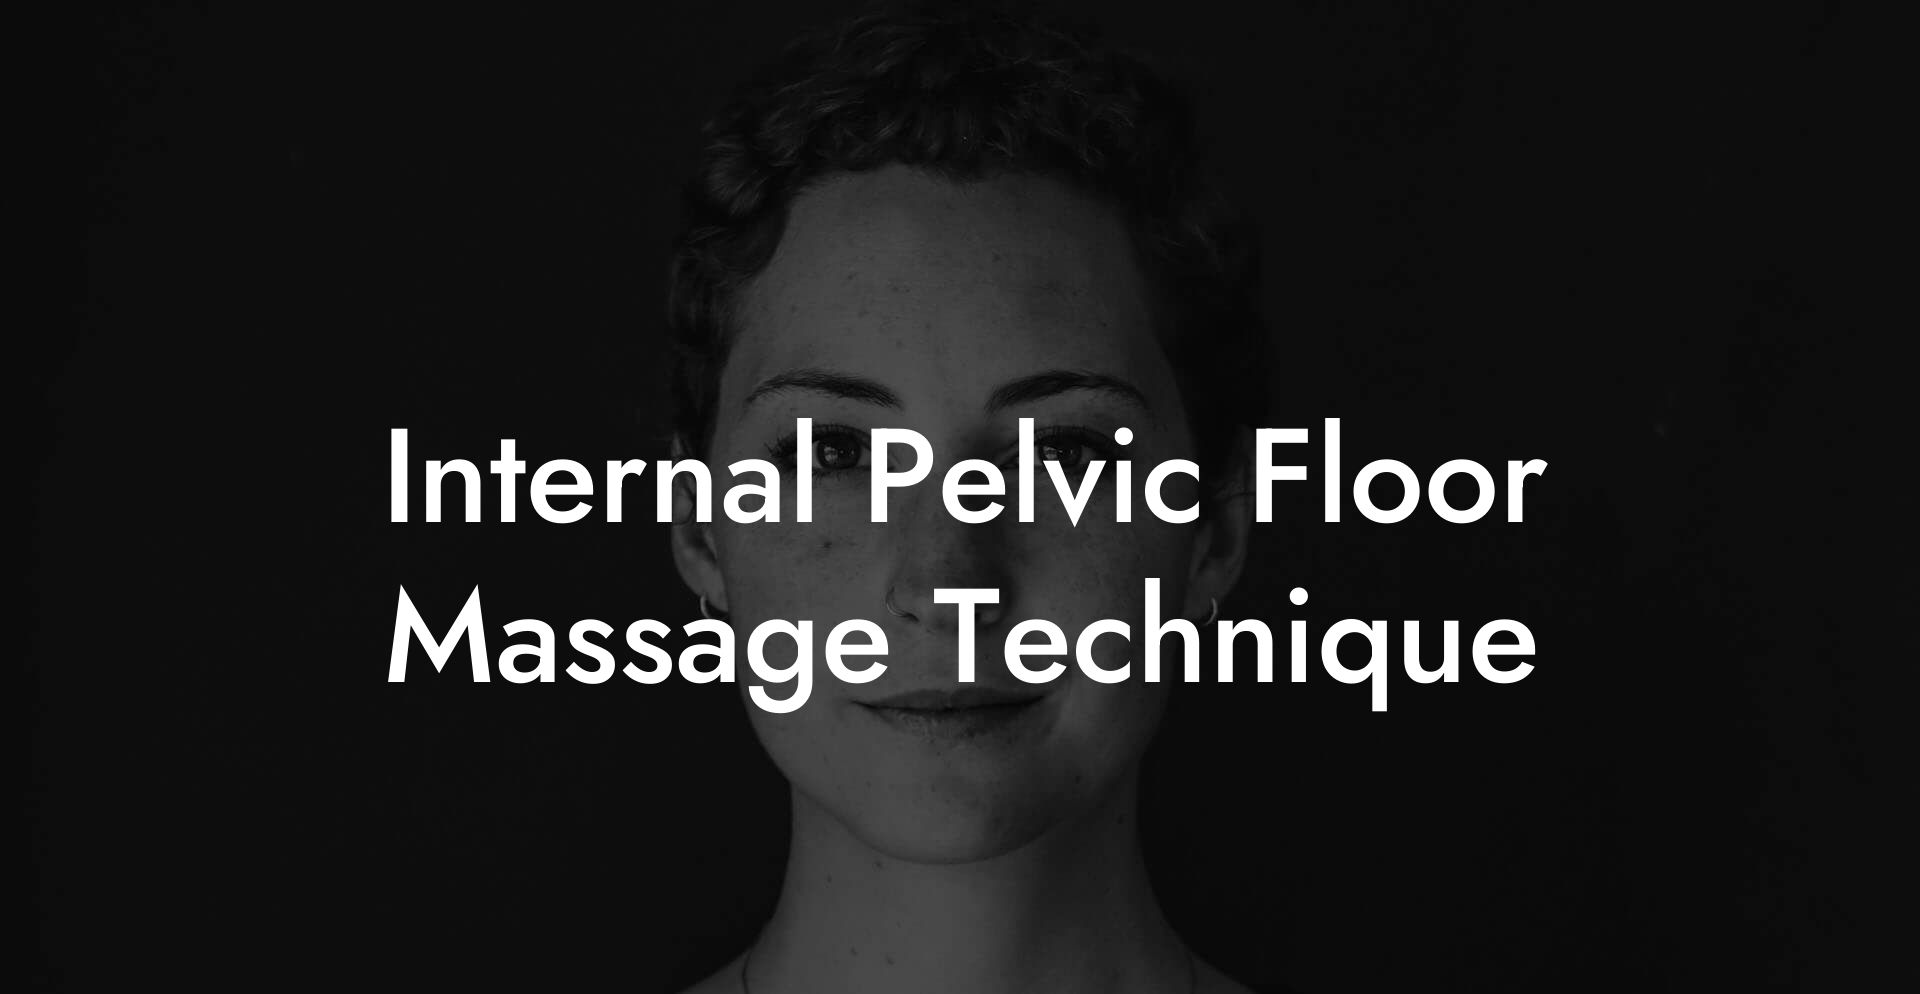 Internal Pelvic Floor Massage Technique